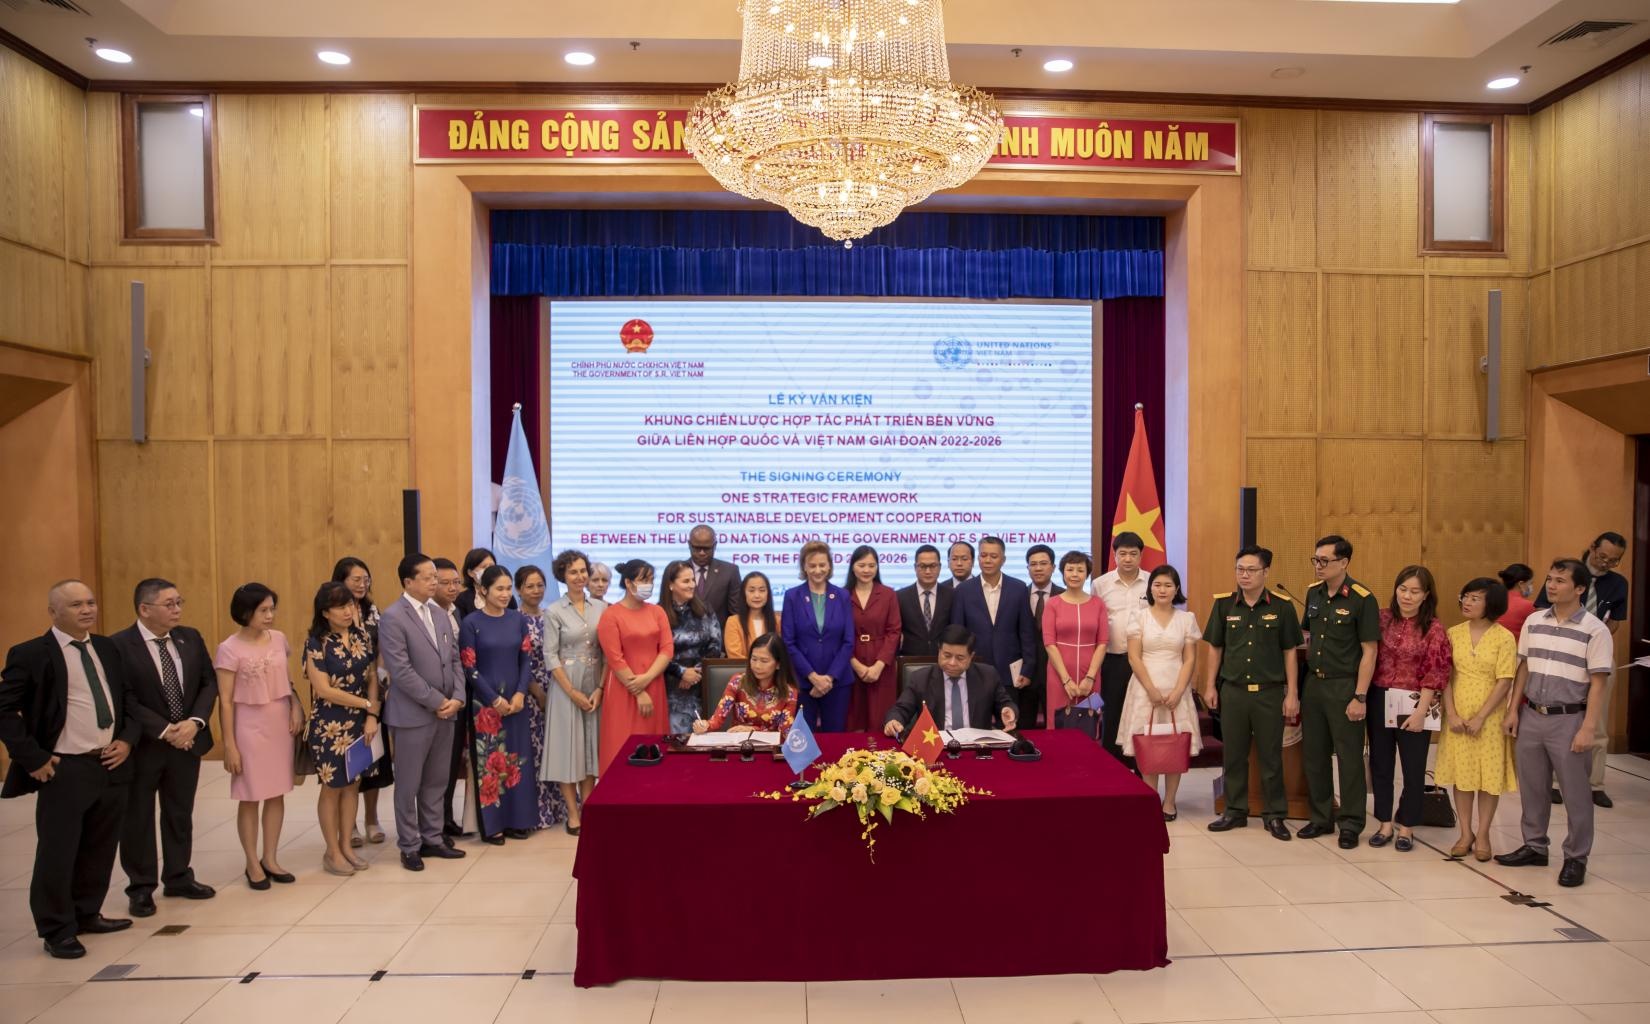 Strategic framework for sustainable development between UN and Vietnam